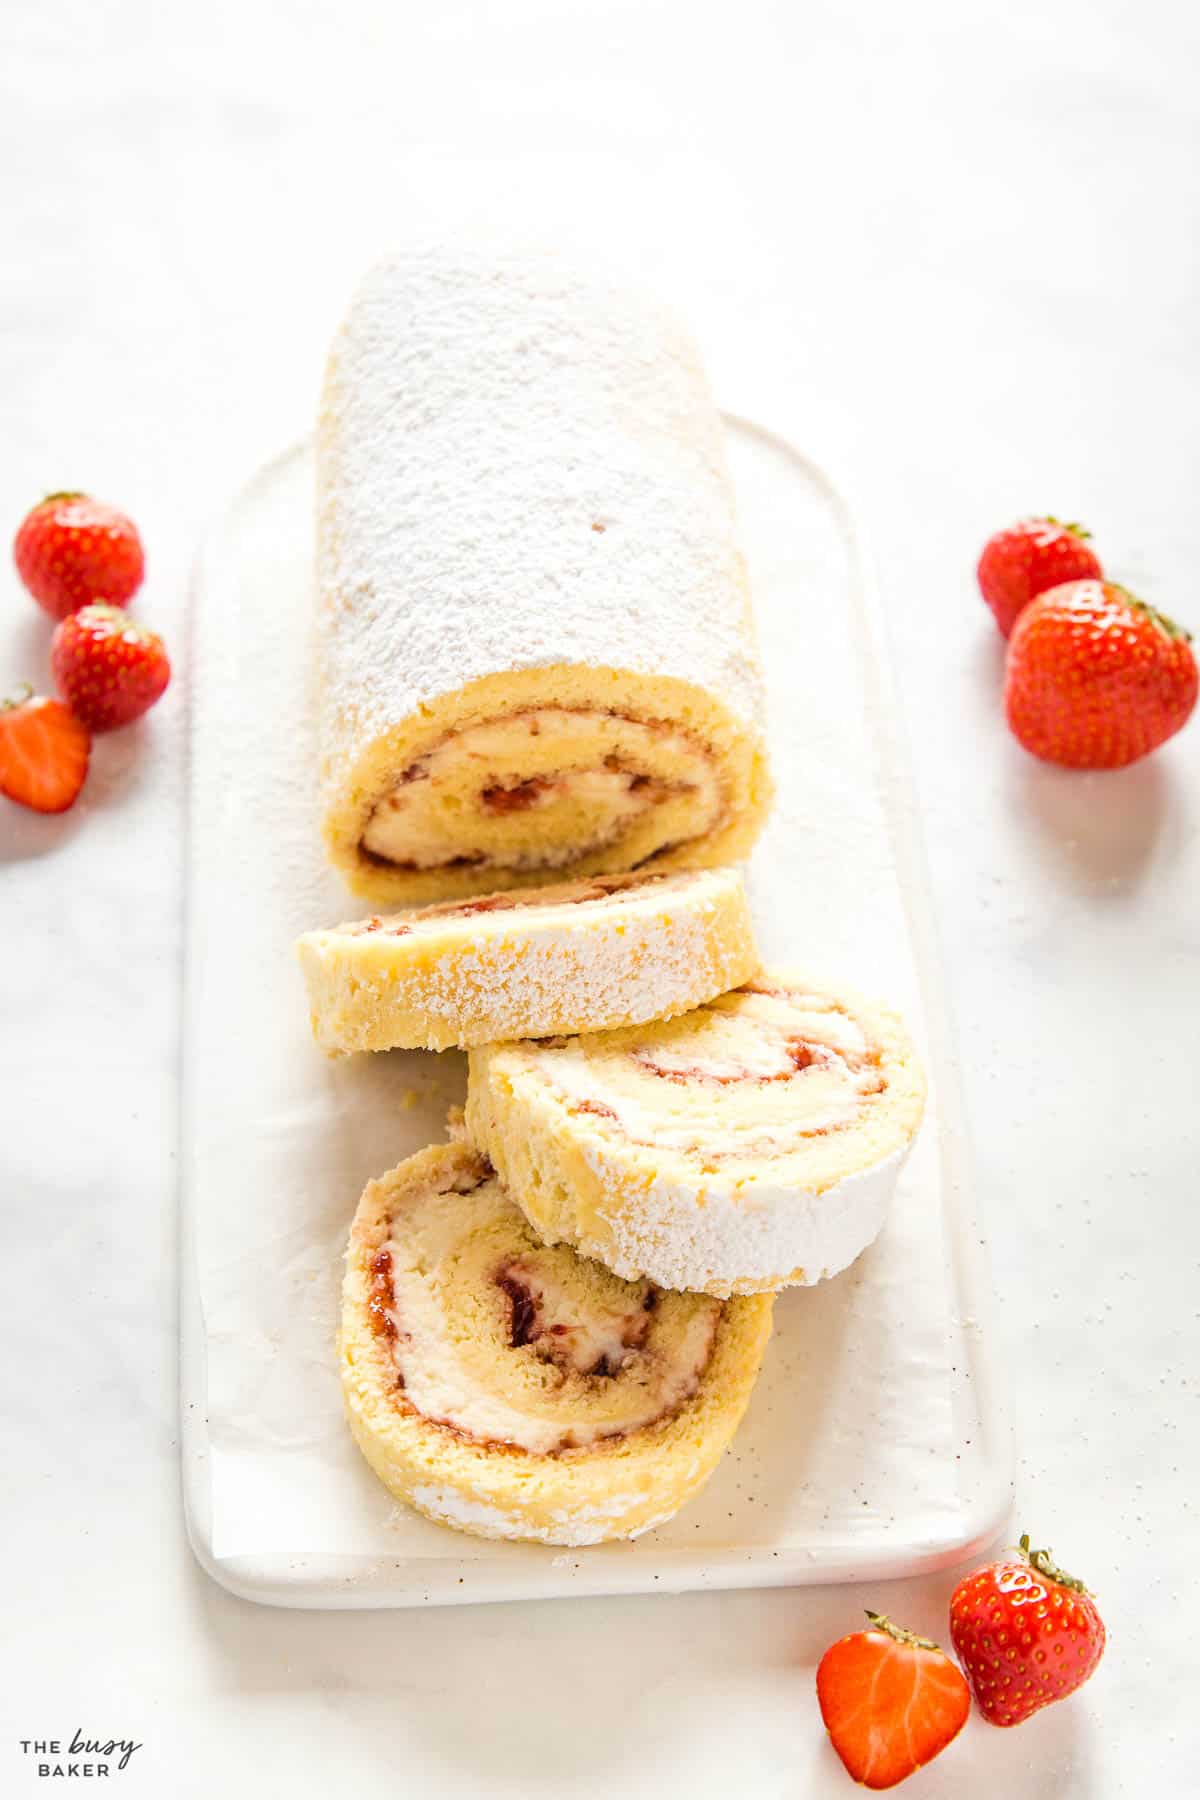 Swiss roll cake with strawberry jam and mascarpone cream